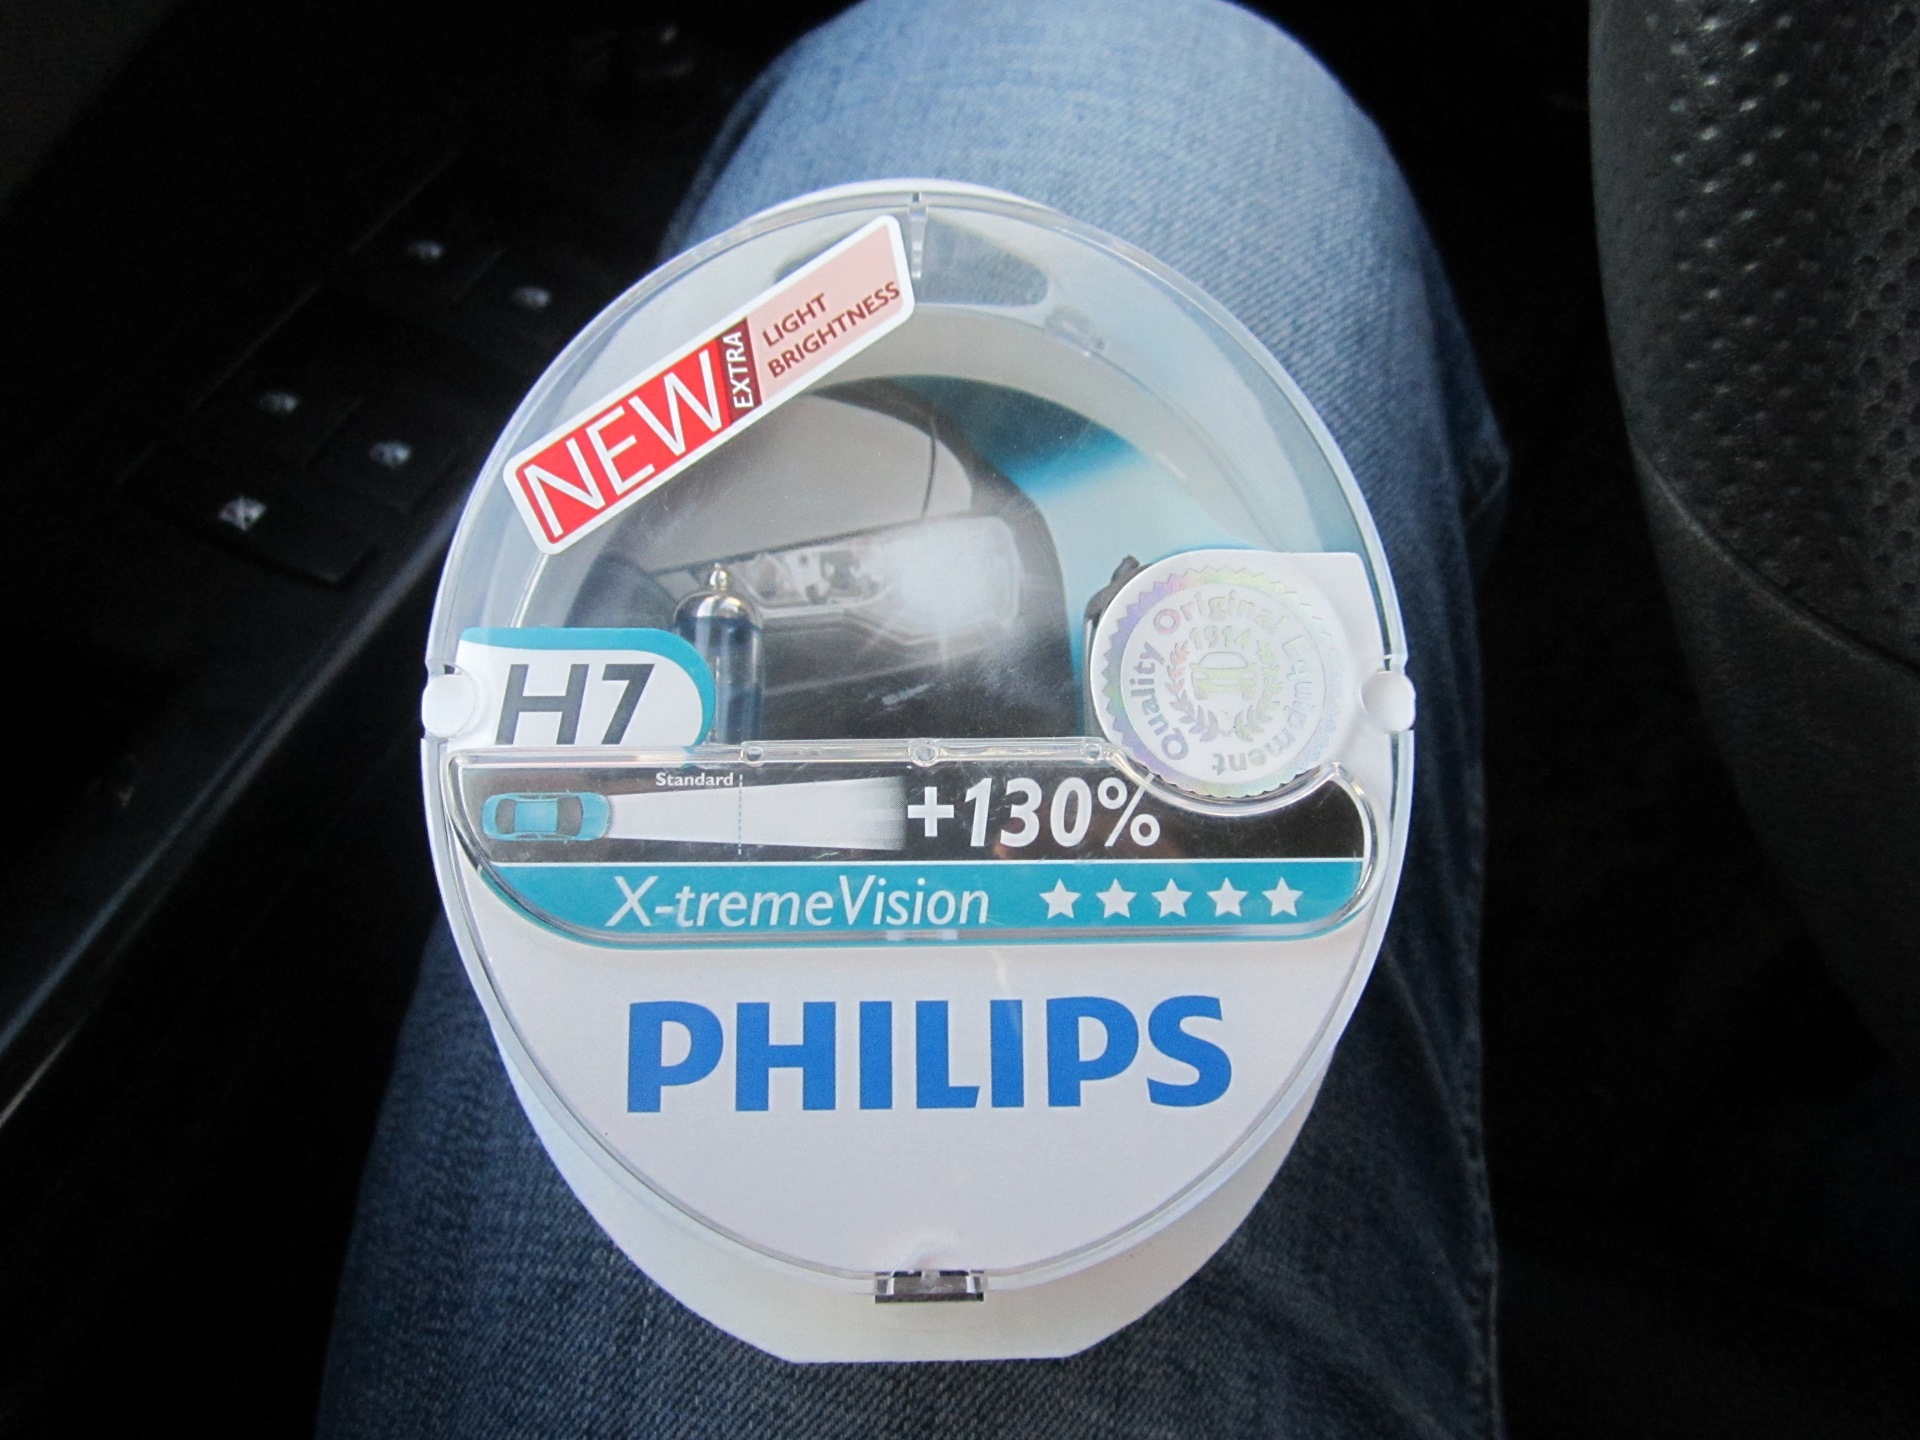 Филипс 130. Филипс экстрим Вижн +130 h7. Philips x-treme Vision +130 h7. H7 Philips x-treme Vision 12972xv. Лампы h7 Philips +130.